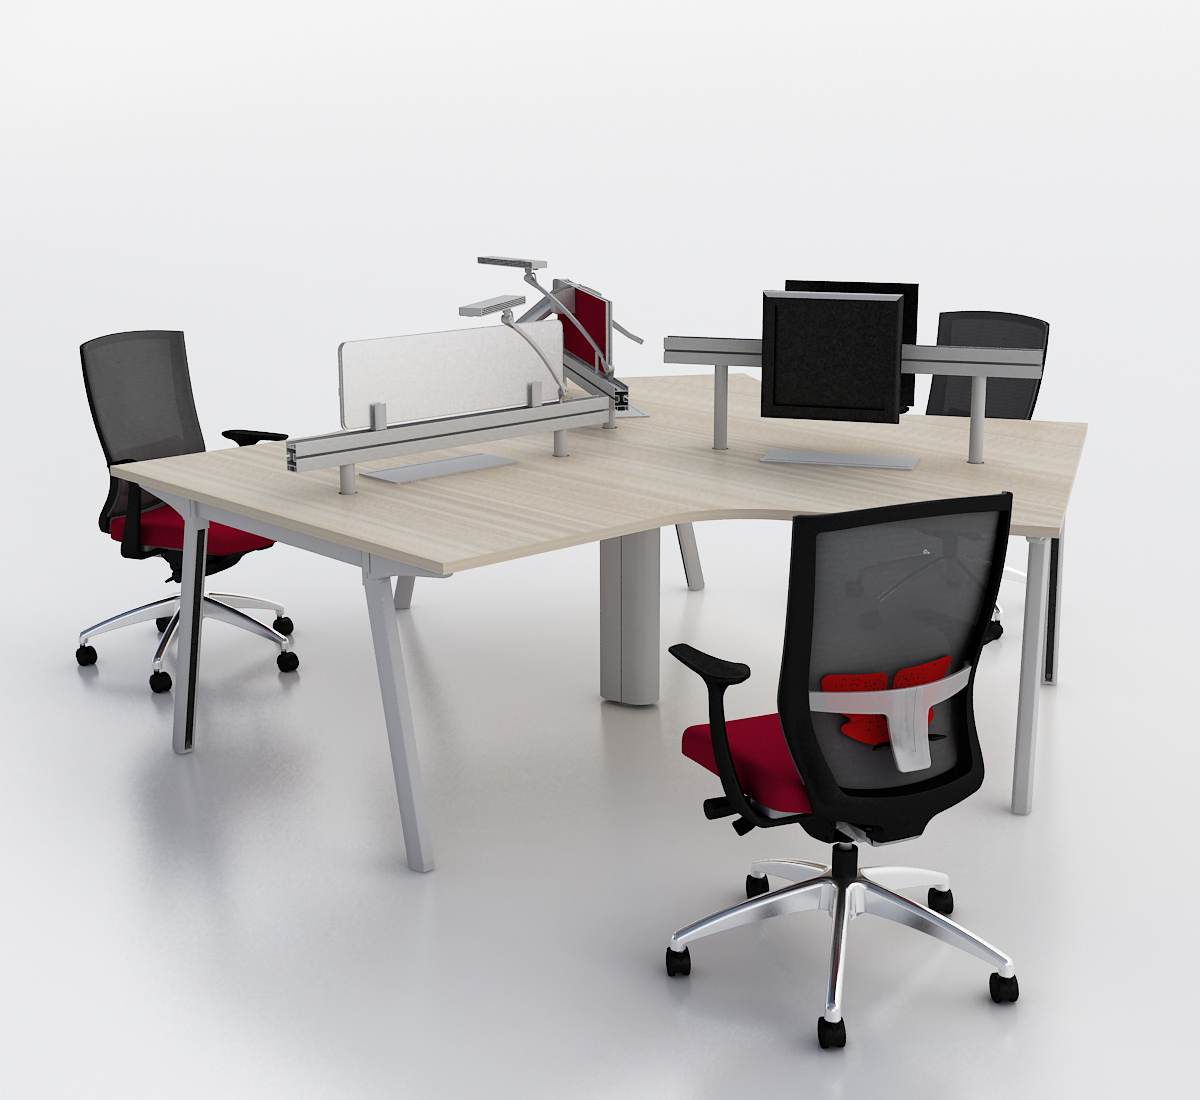 GECA E-Stilts Eco Desk System